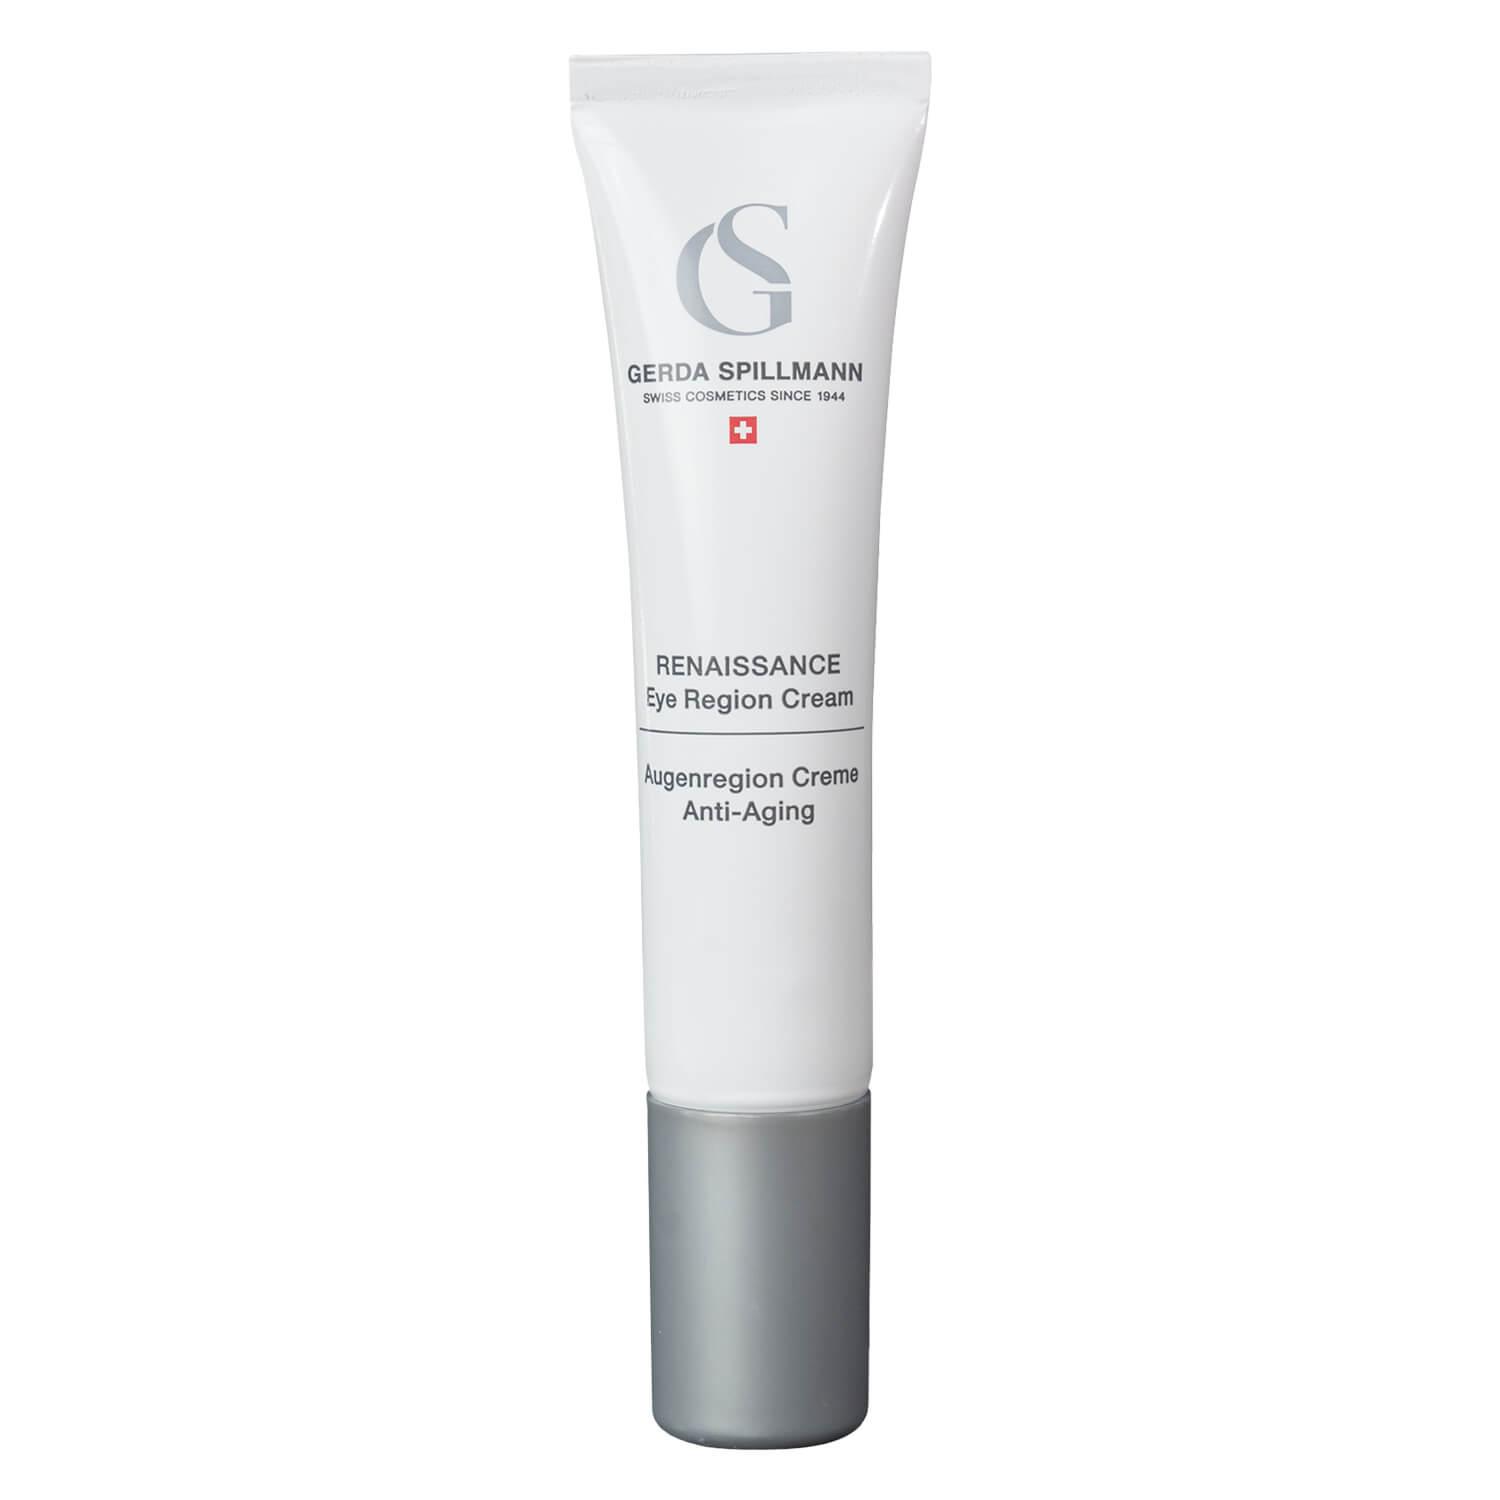 GS Skincare - Renaissance Eye Region Cream